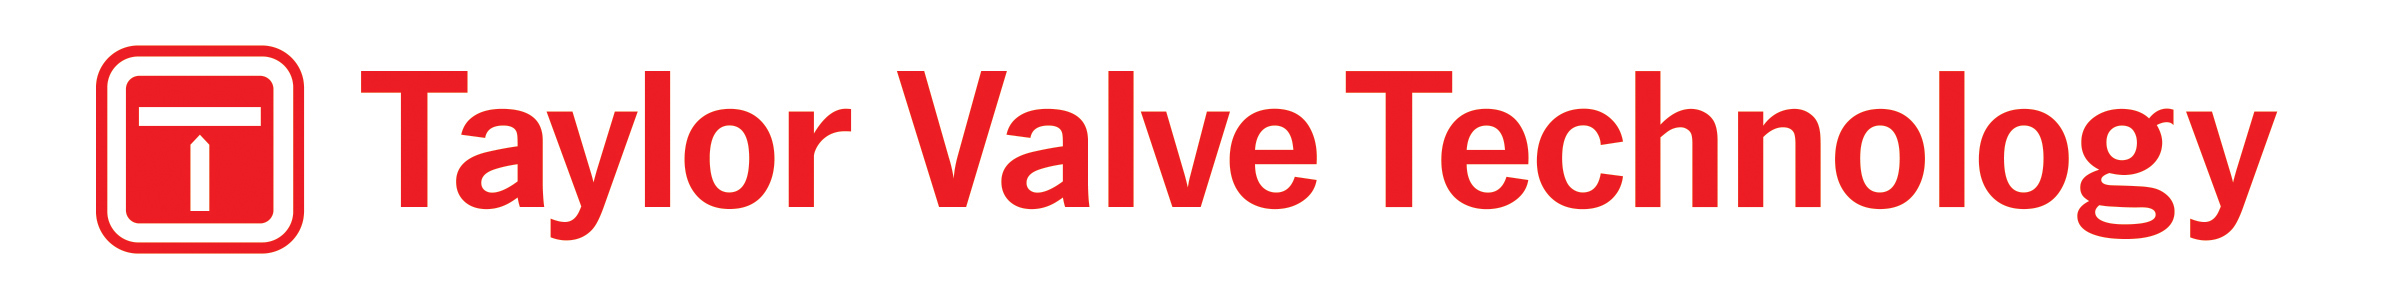 TVT Logo Inline v2